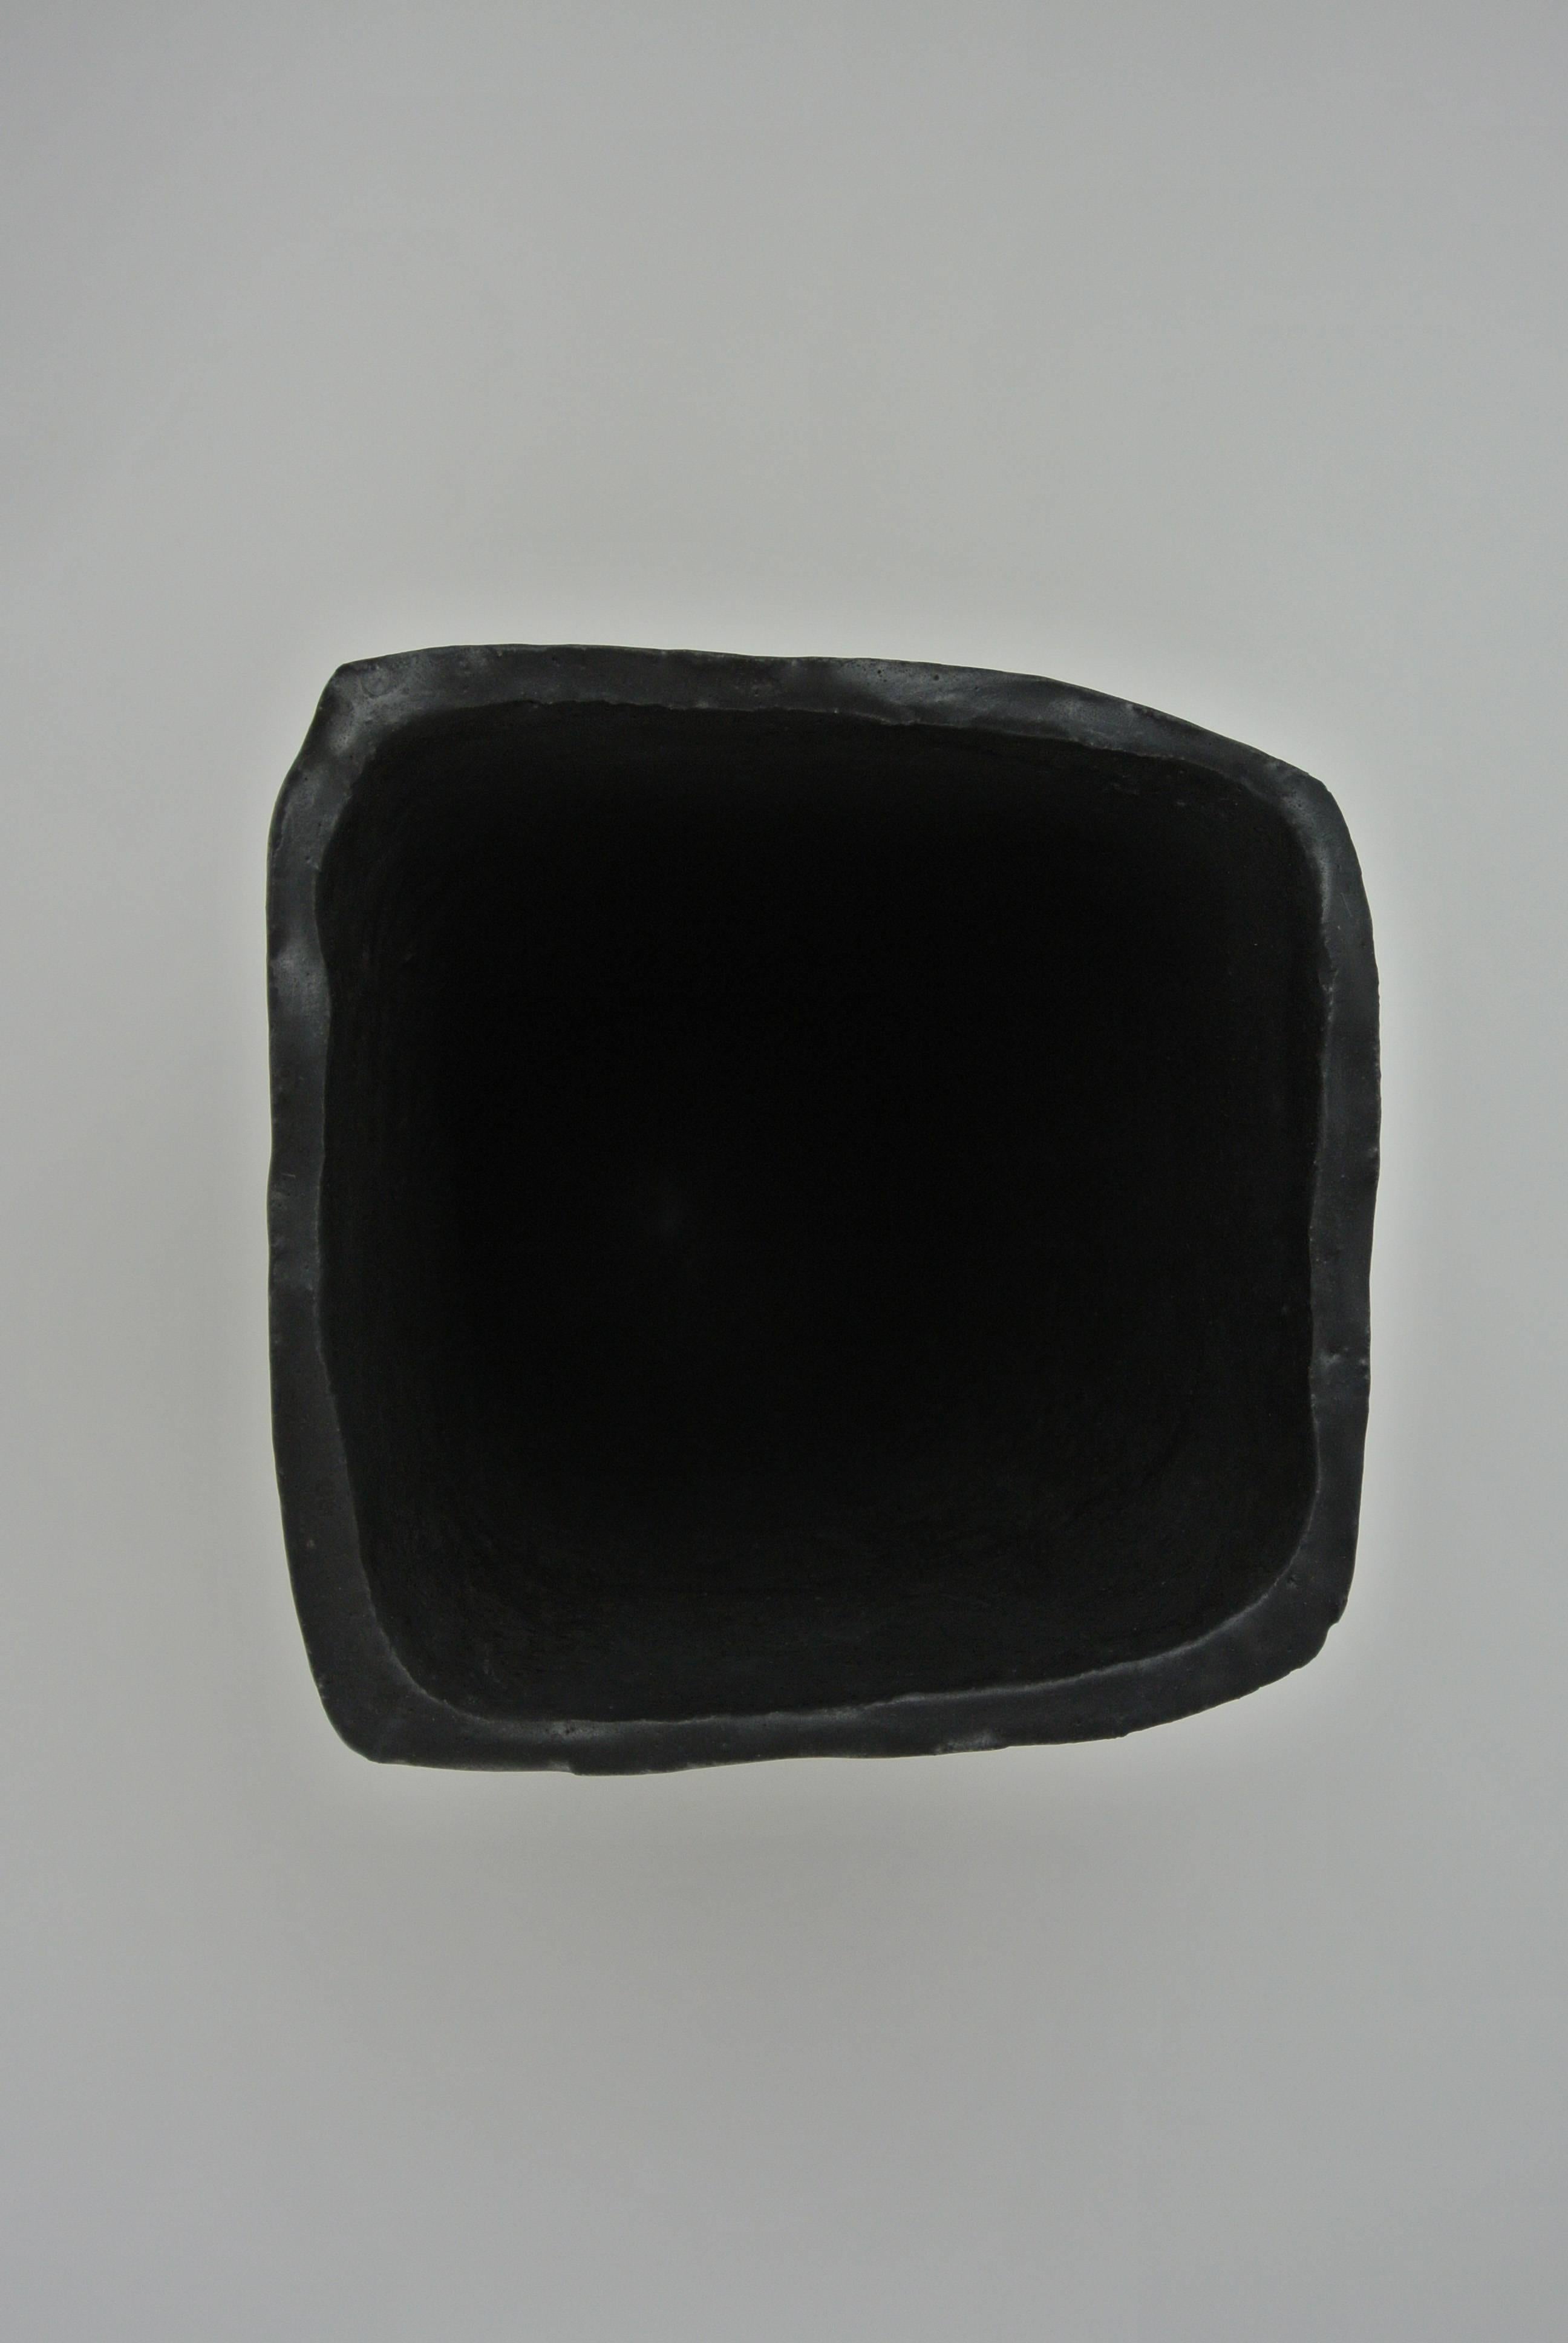 Organic Modern Contemporary Black Stoneware Vase with Black Matte Glaze